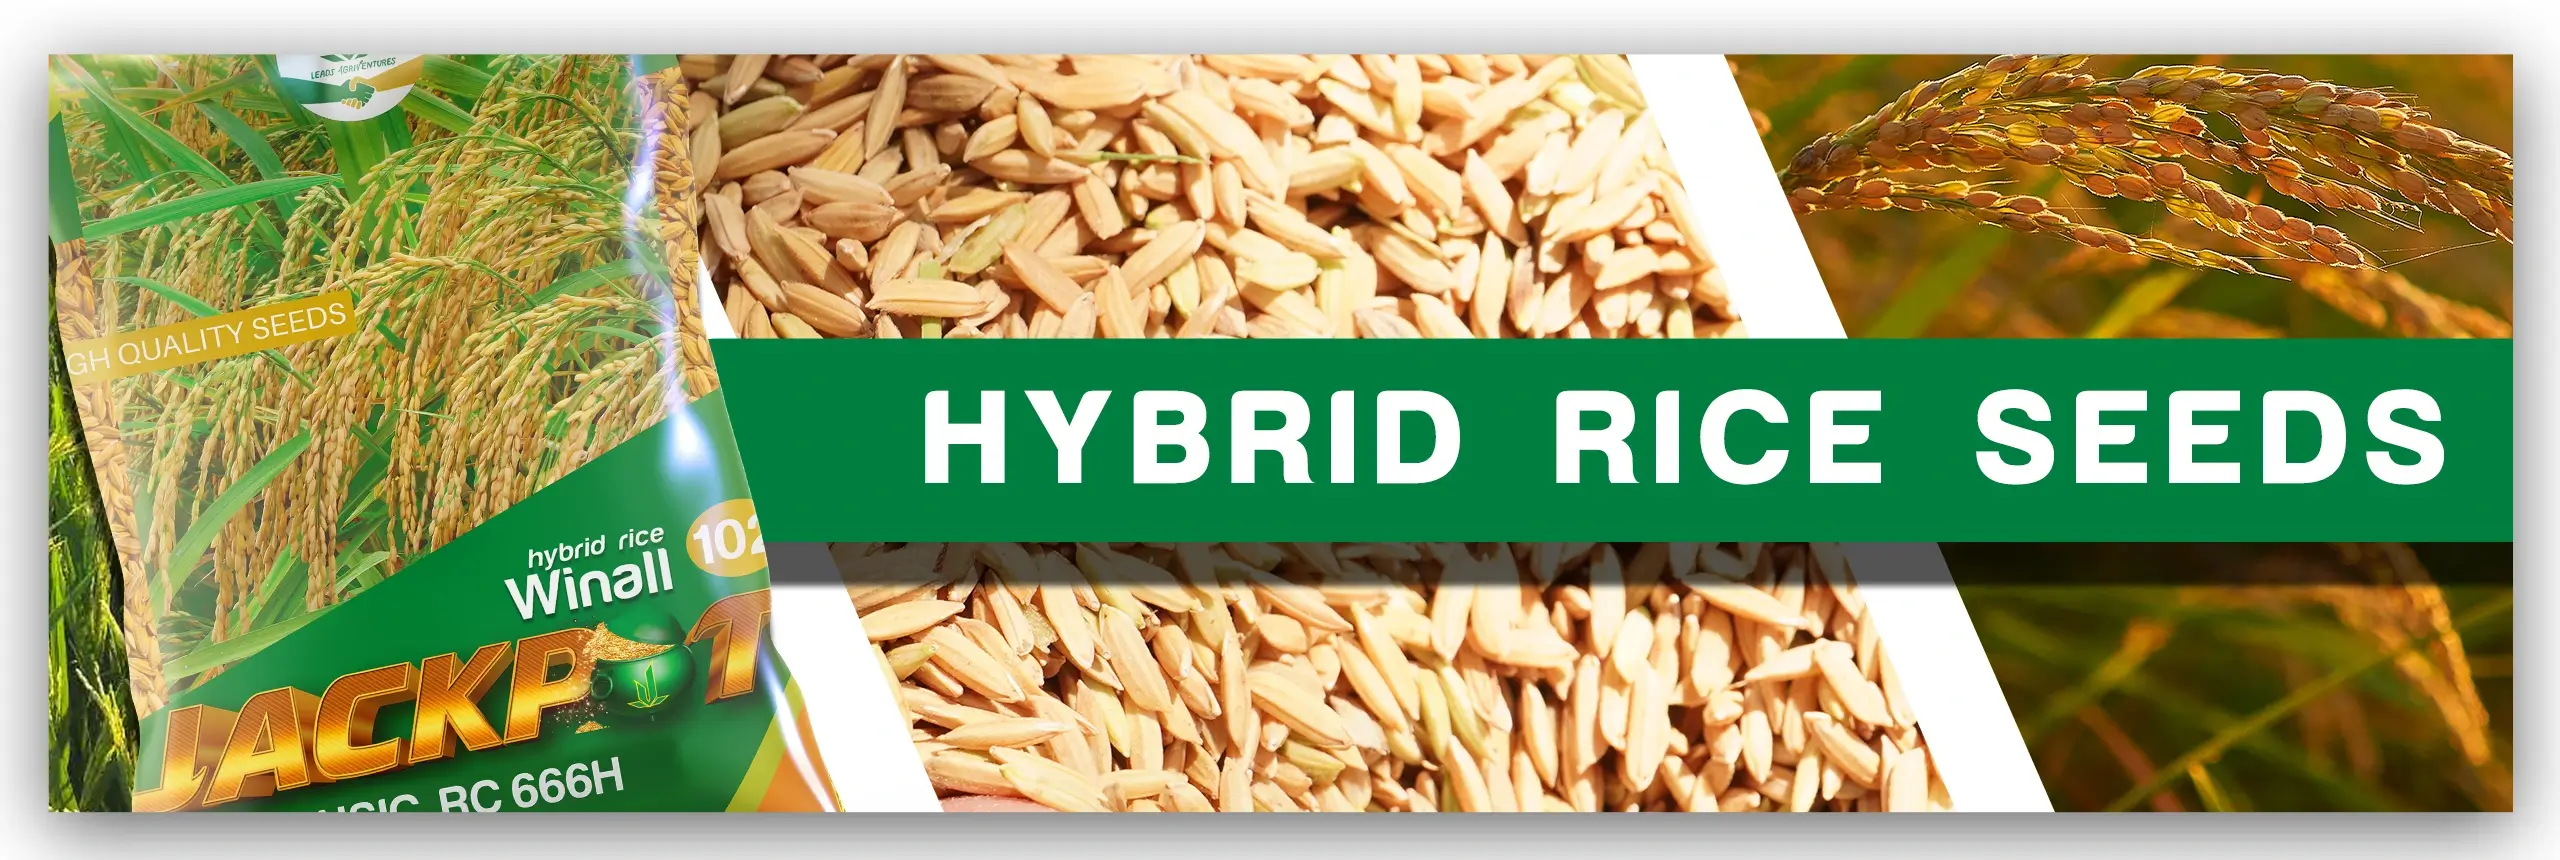 HYBRID Rice